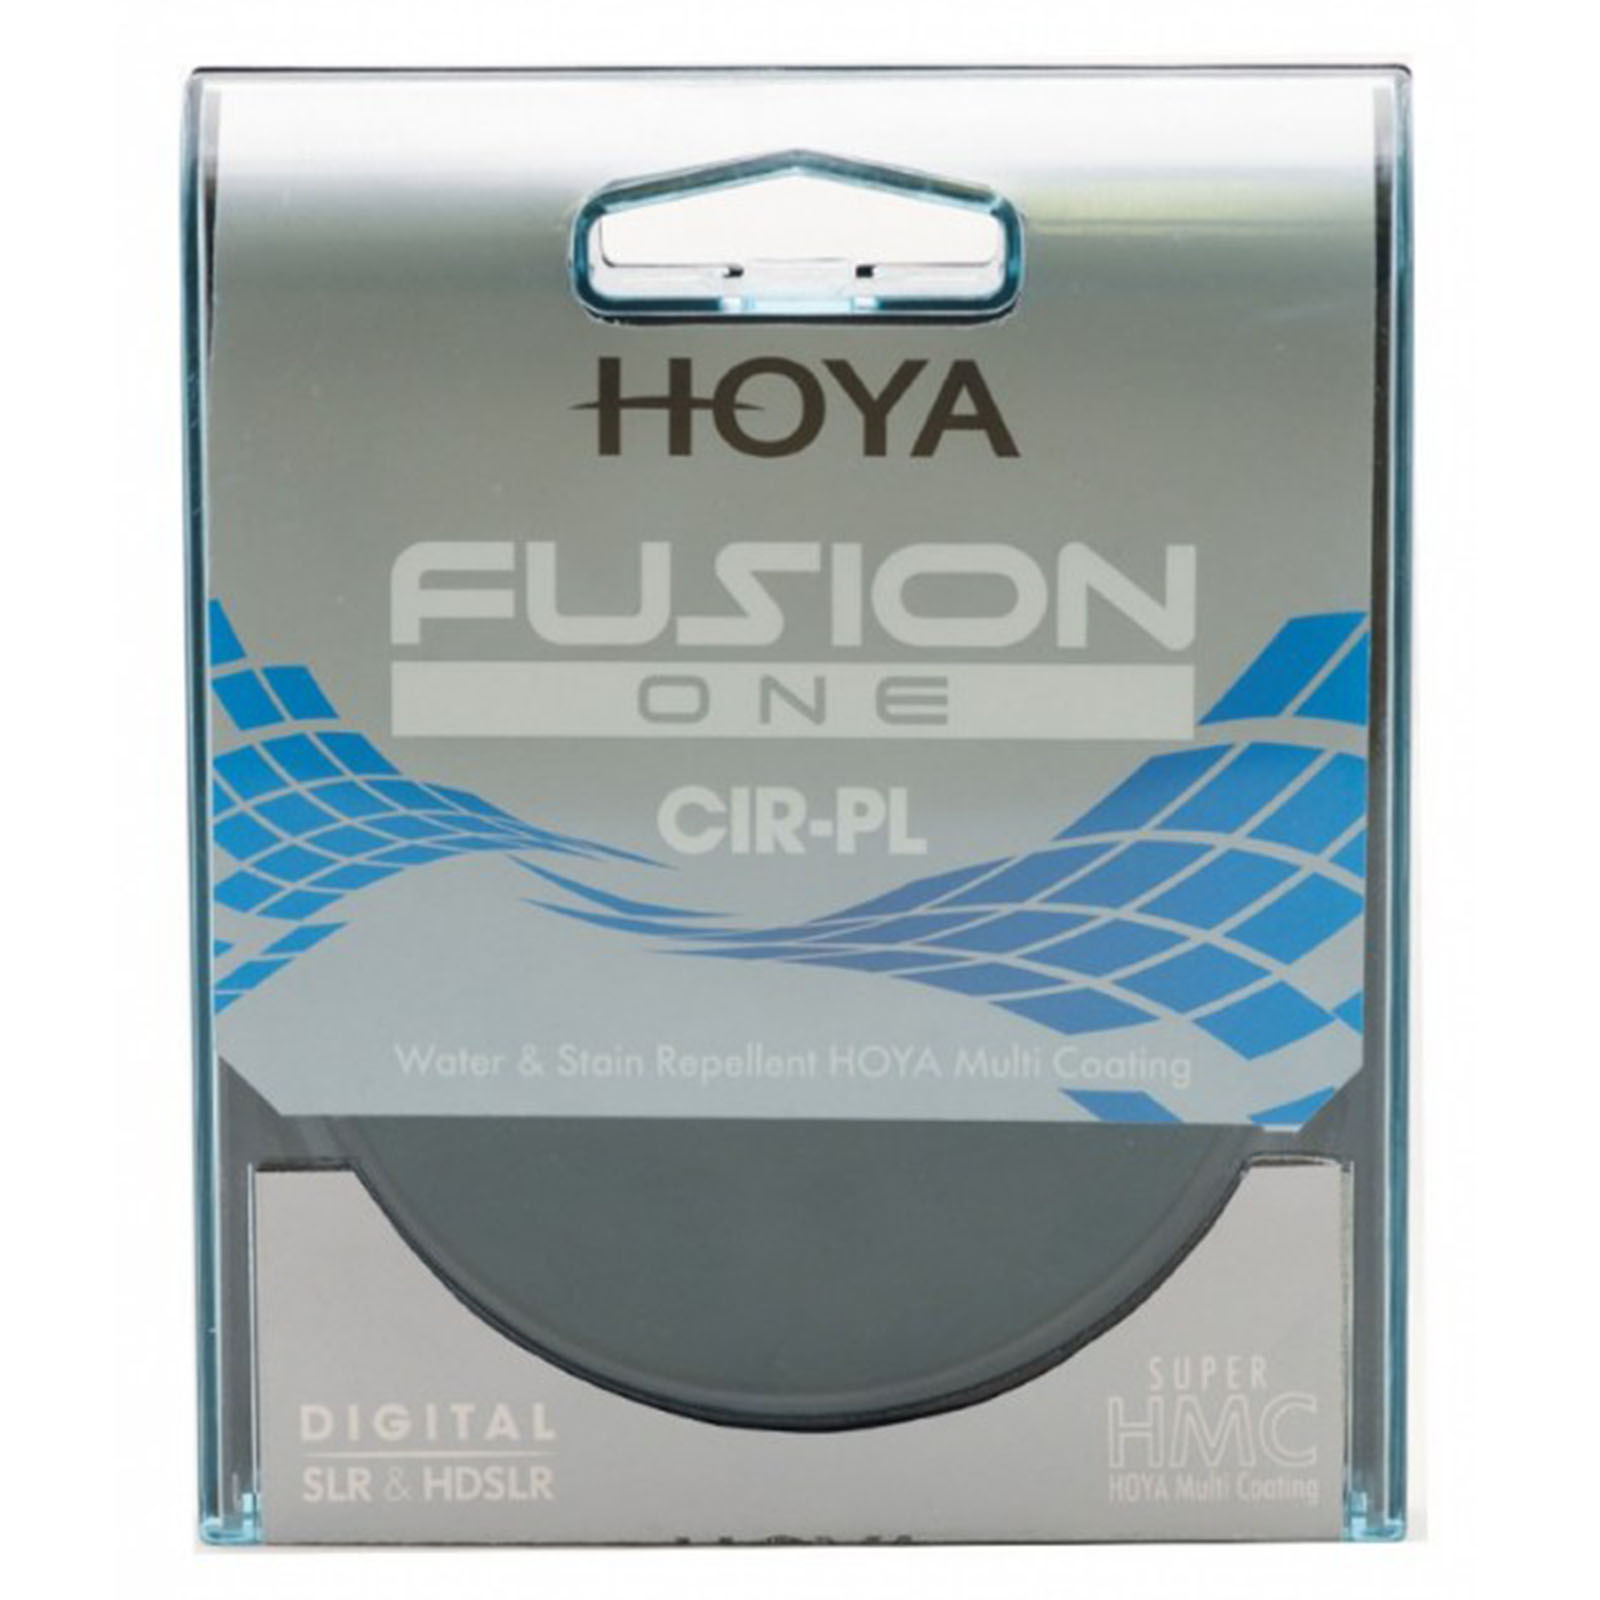 Image of Hoya 405mm Fusion One Next Circular Polariser Filter